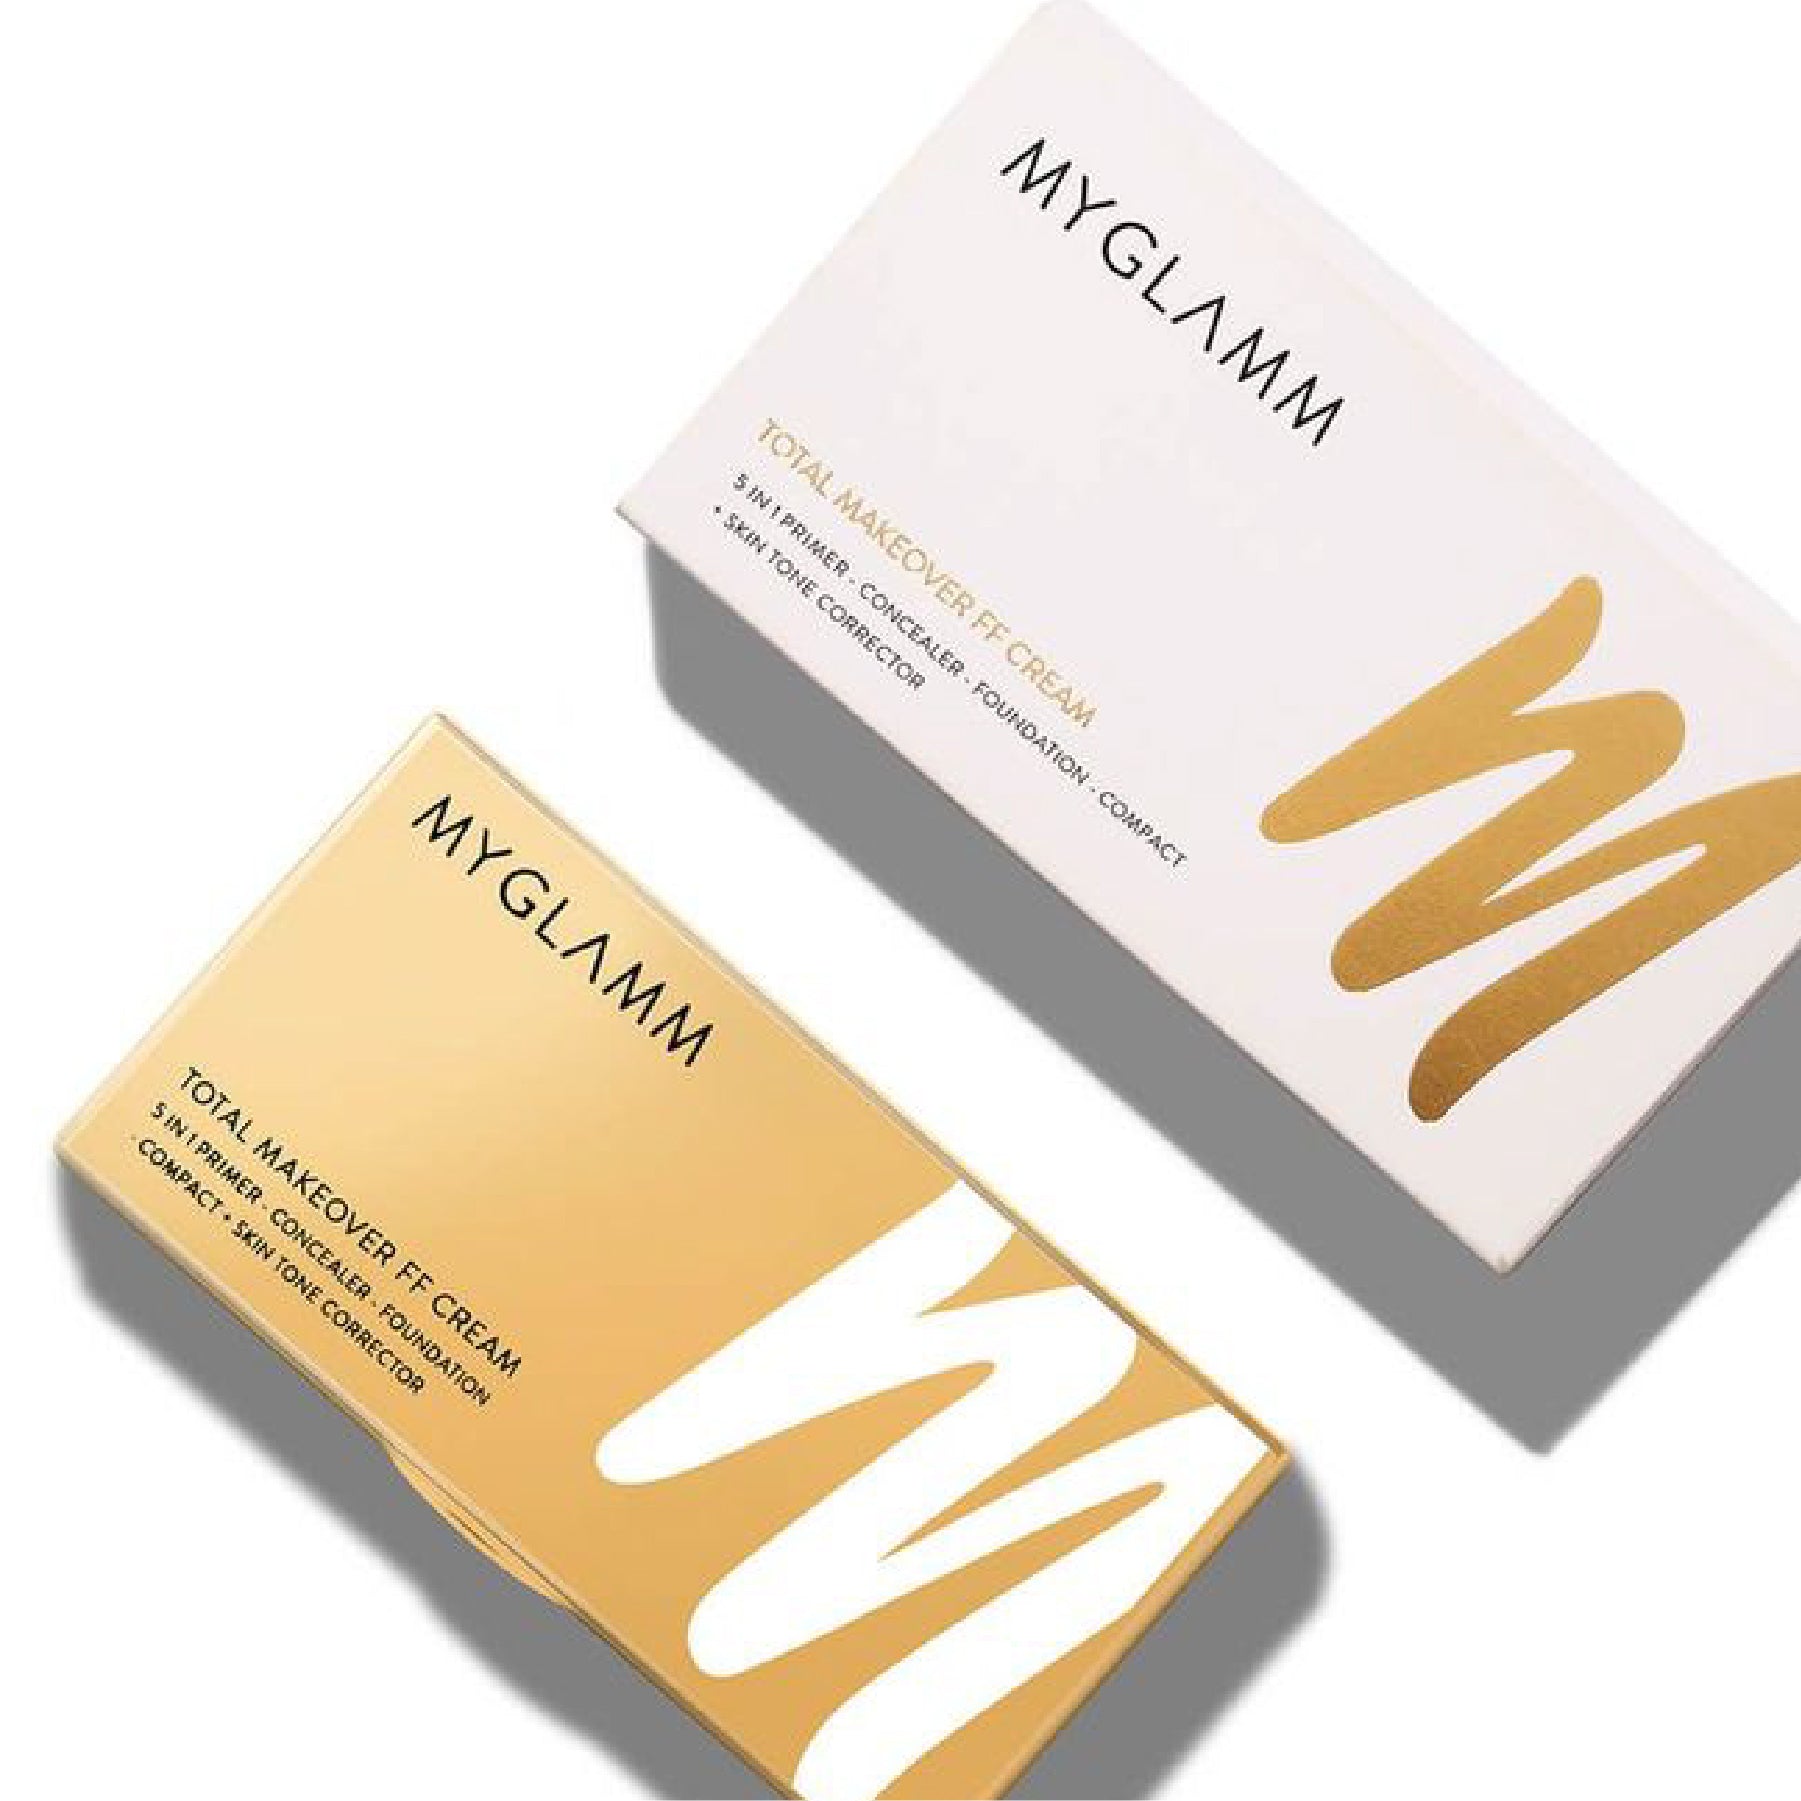 MyGlamm Total Makeover FF Cream Foundation Palette-Honey-5gm